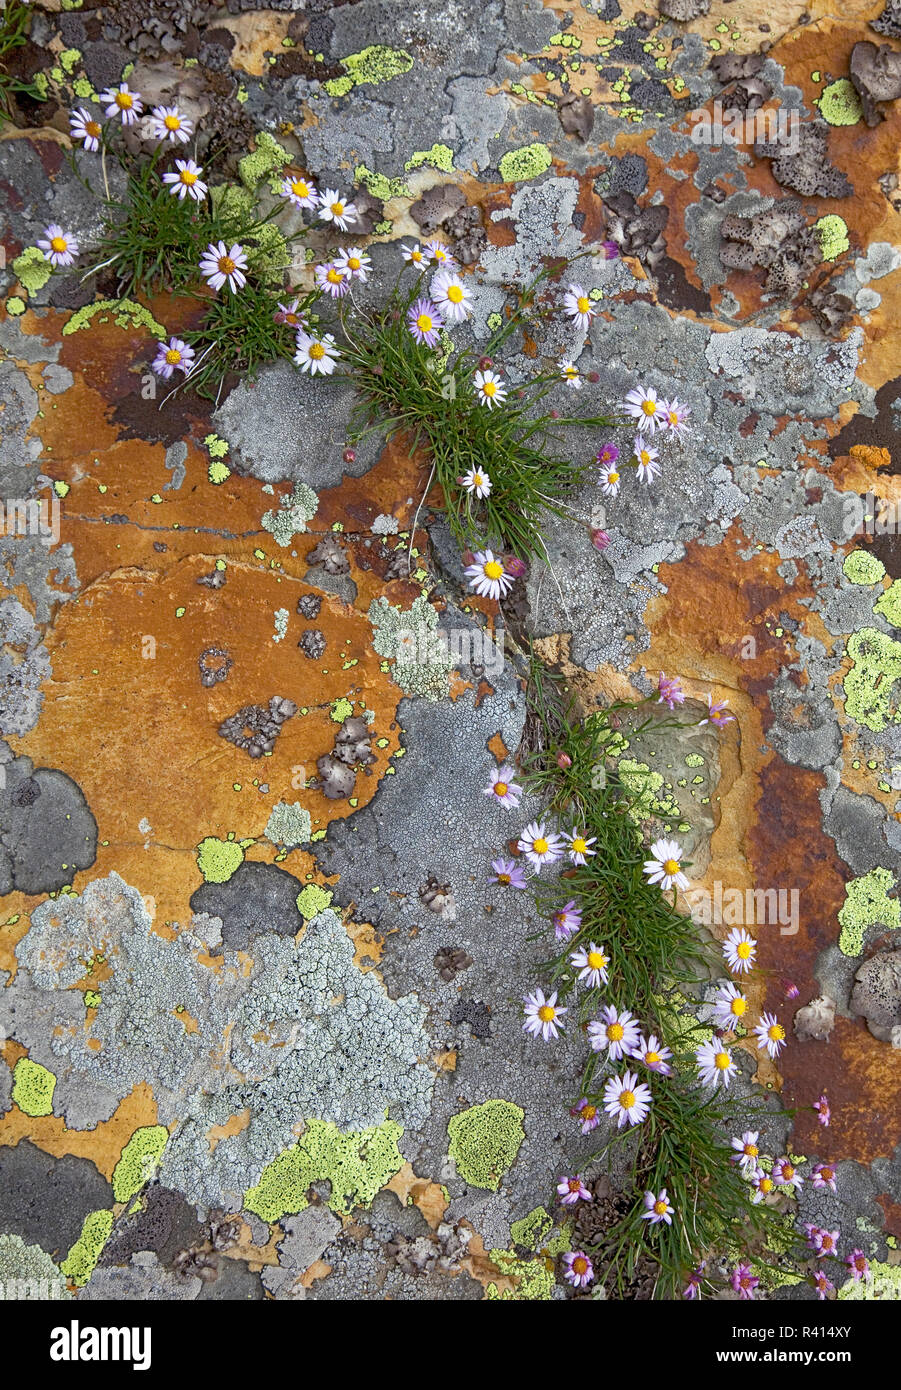 USA, Utah, Uinta-Wasatch-Cache National Forest, Twin Peaks Wilderness, le lichen sur la pierre Banque D'Images